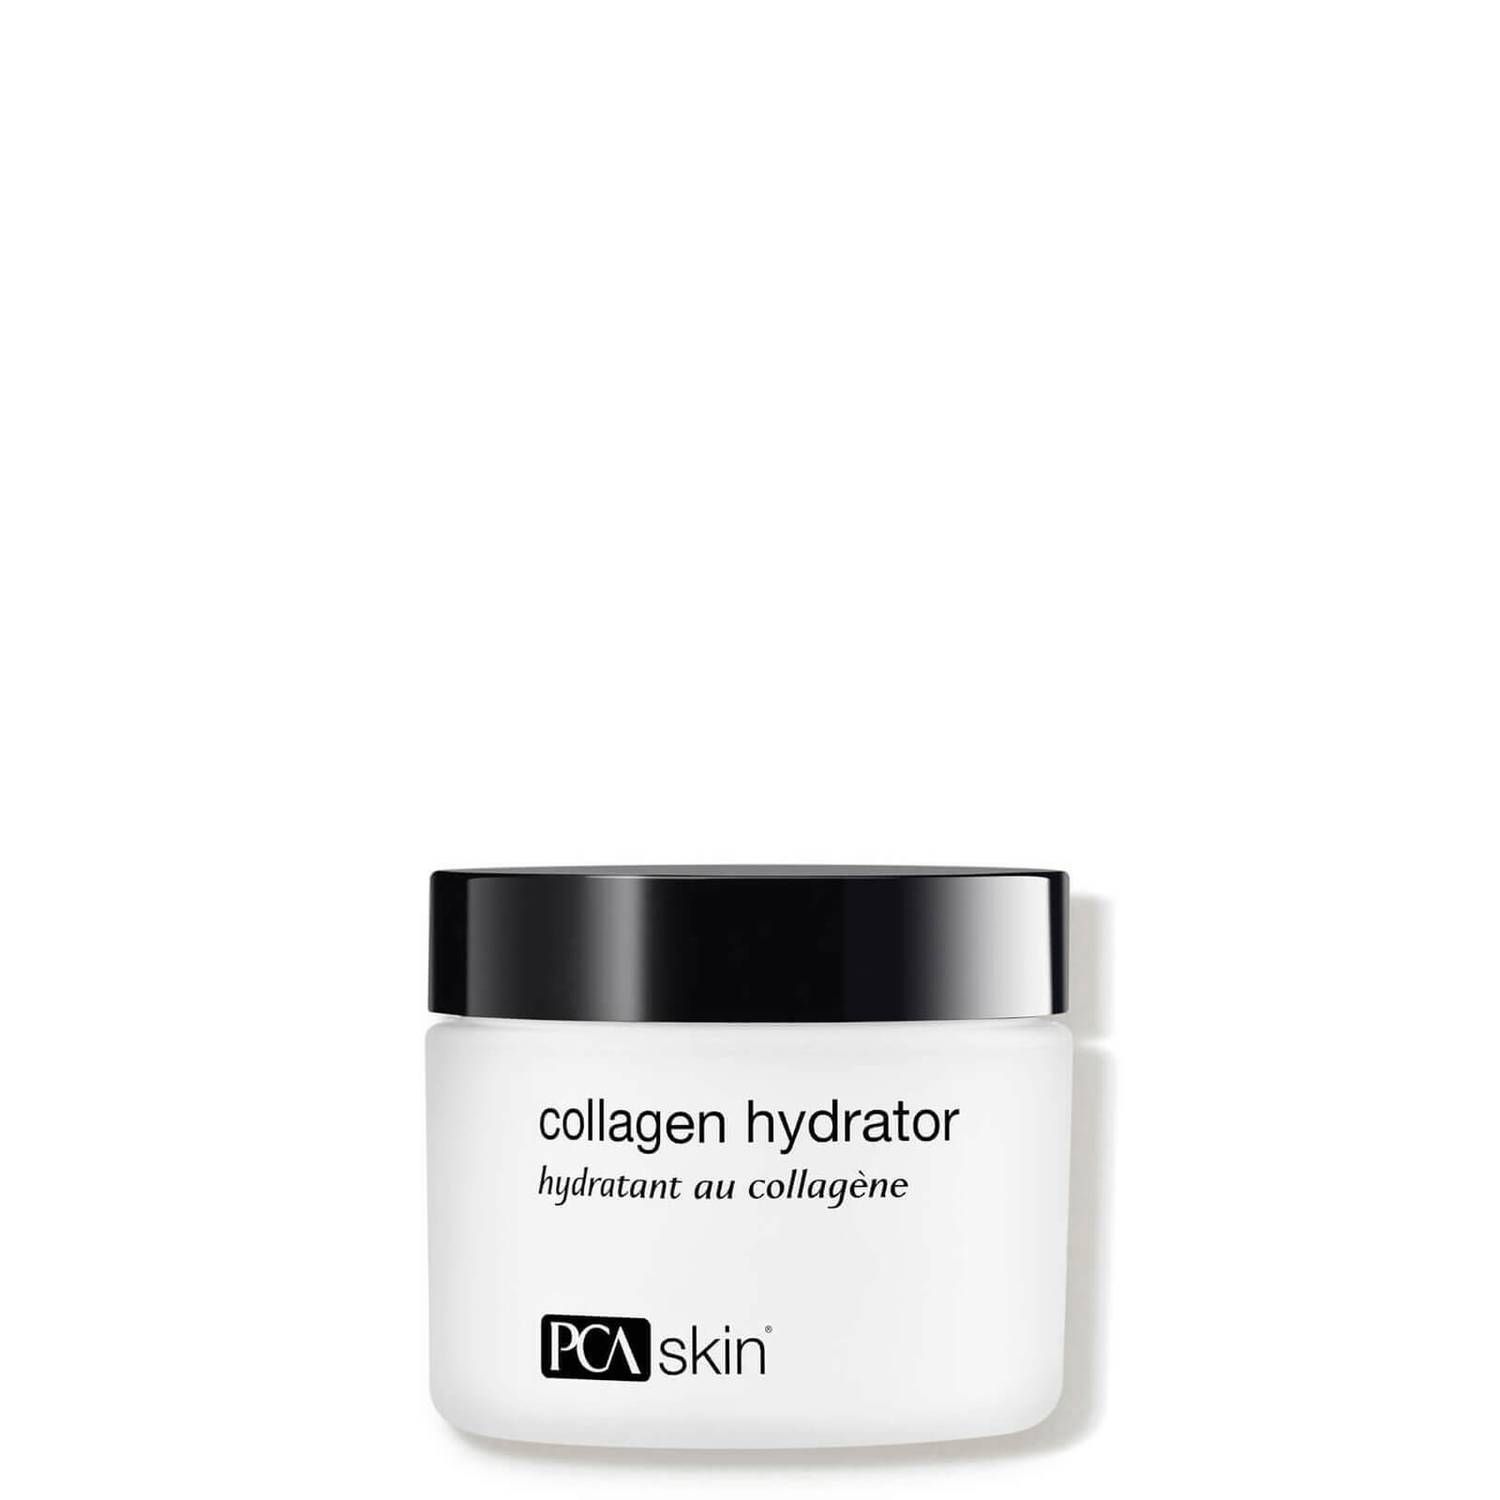 PCA SKIN Collagen Hydrator (1.7 oz.) | Dermstore